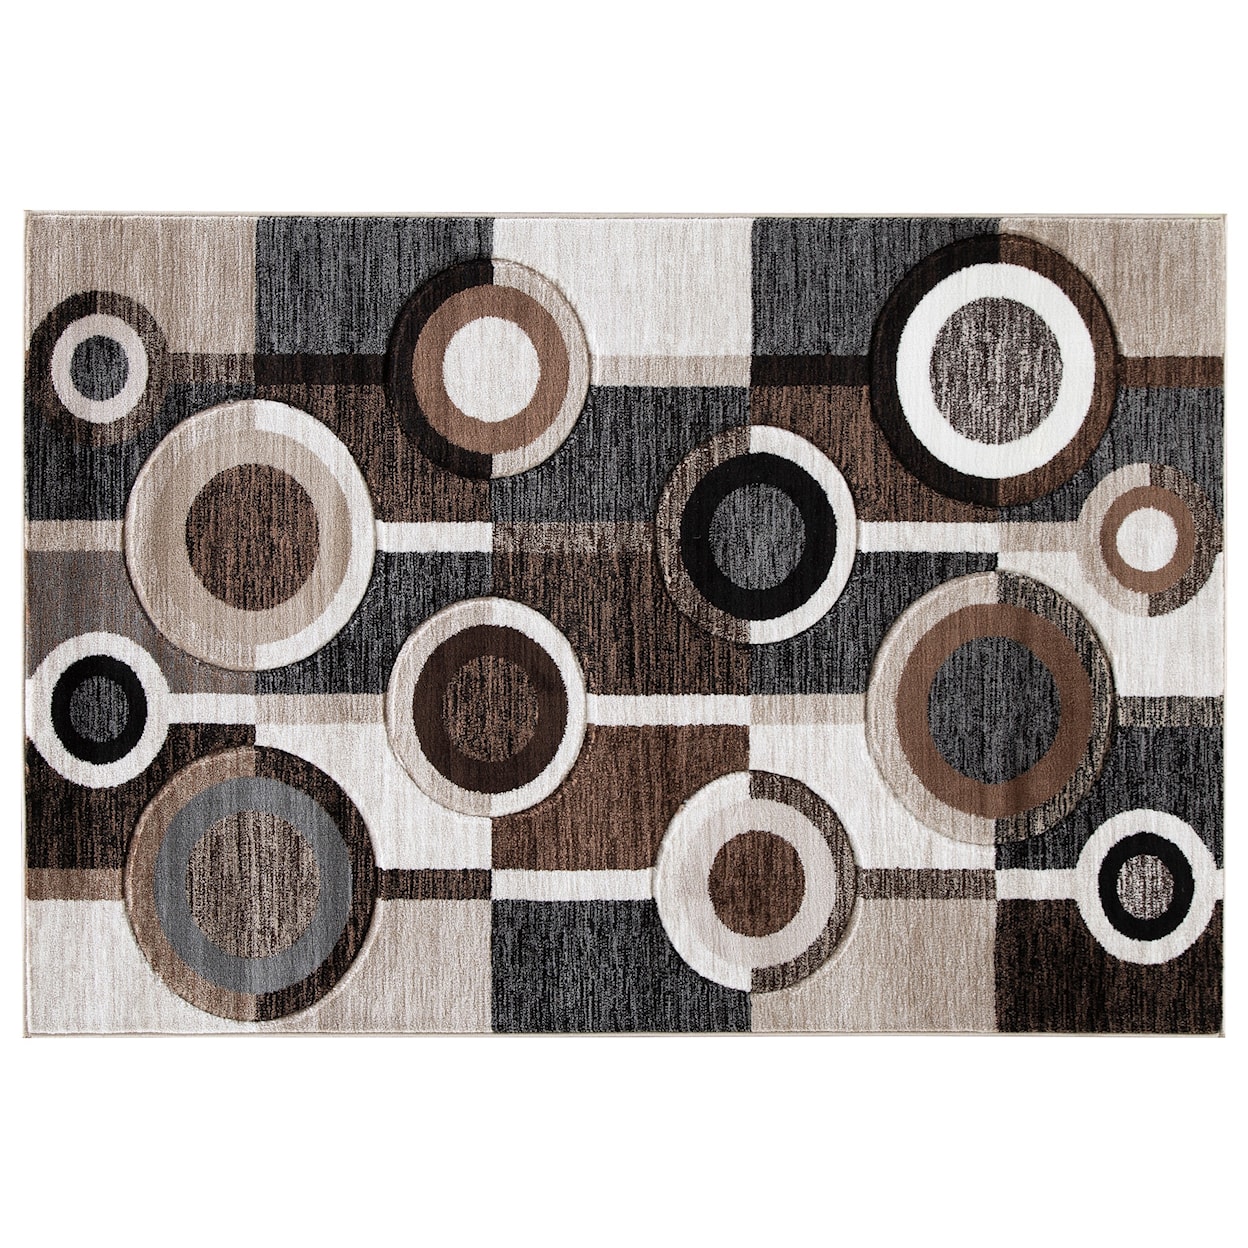 Signature Design Contemporary Area Rugs Guintte Black/Brown/Cream Large Rug